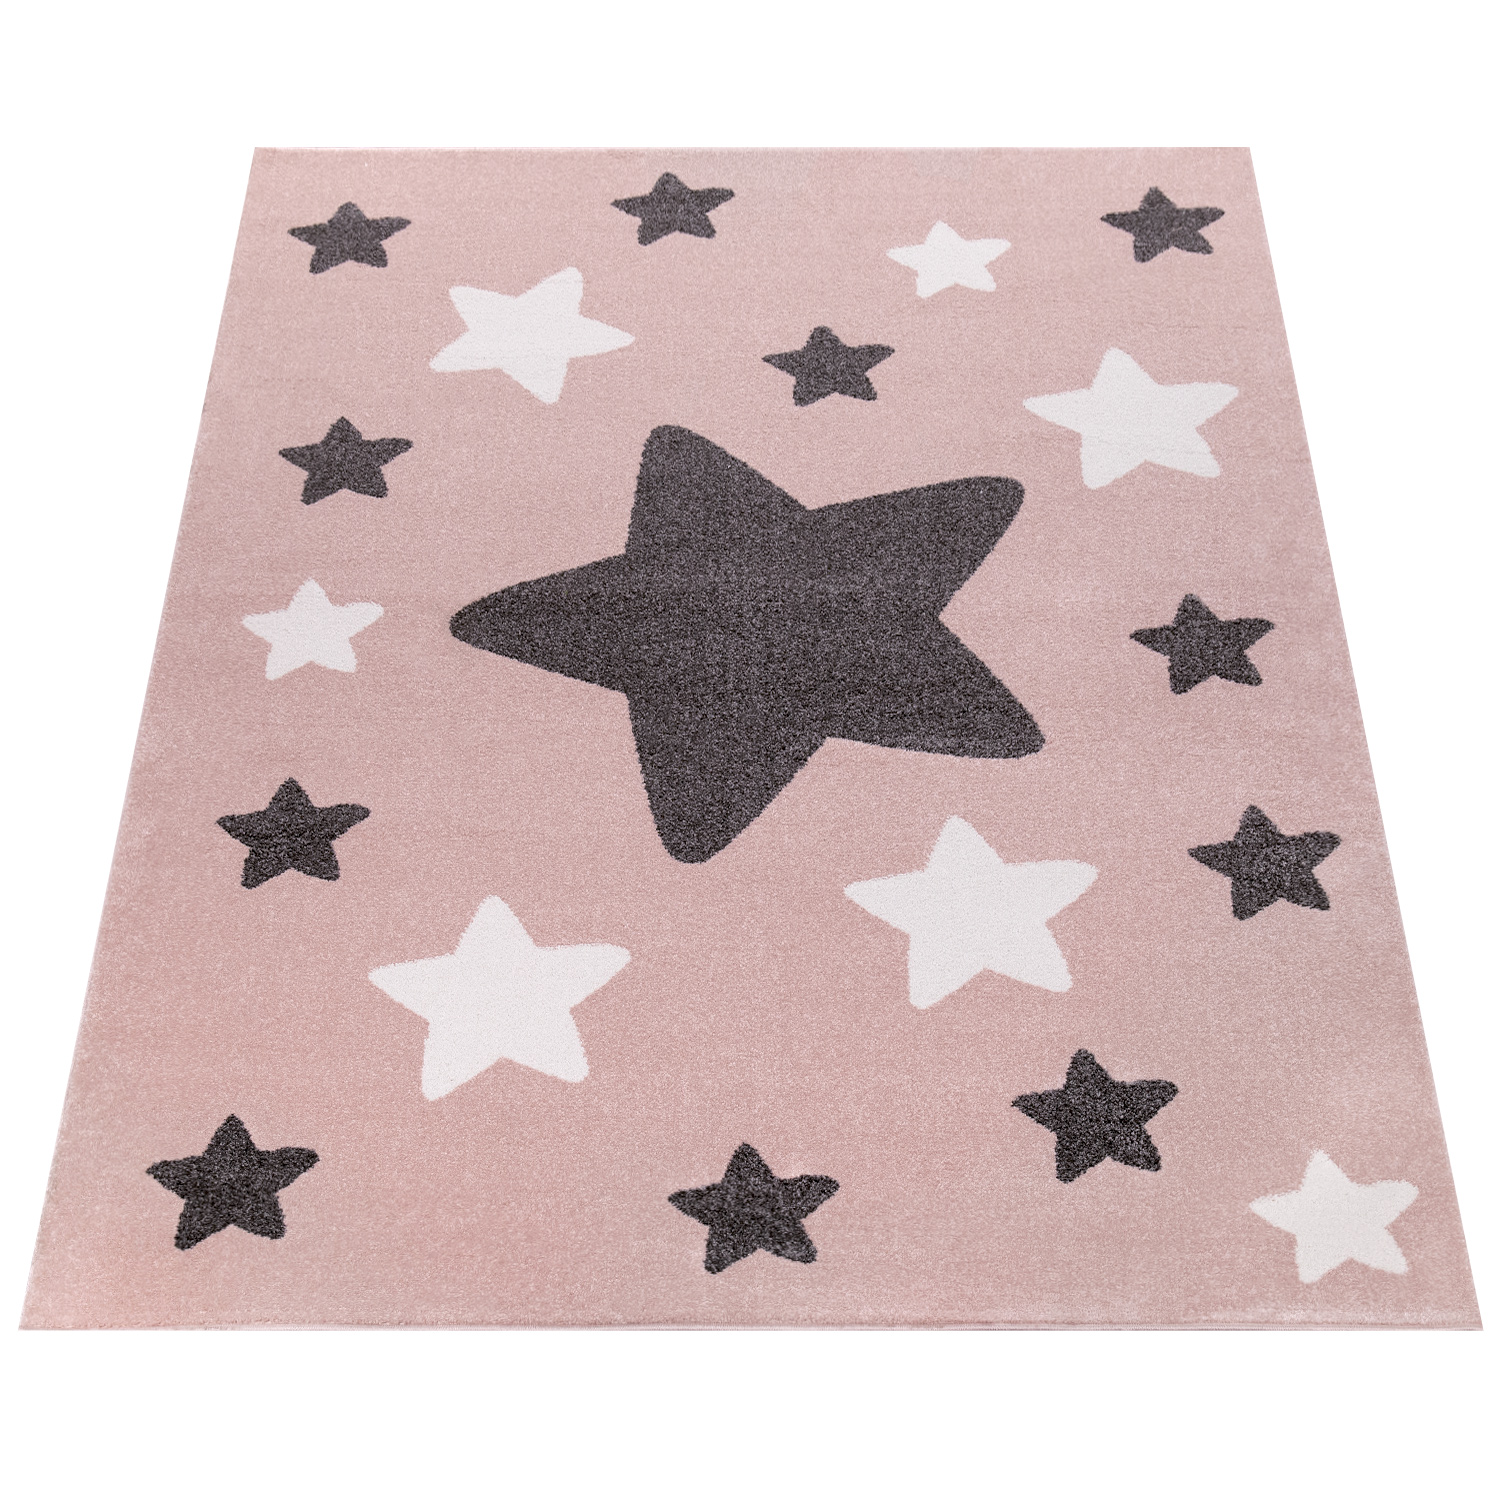 Kinderteppich Kinderzimmer Sterne Kurzflor Pink 